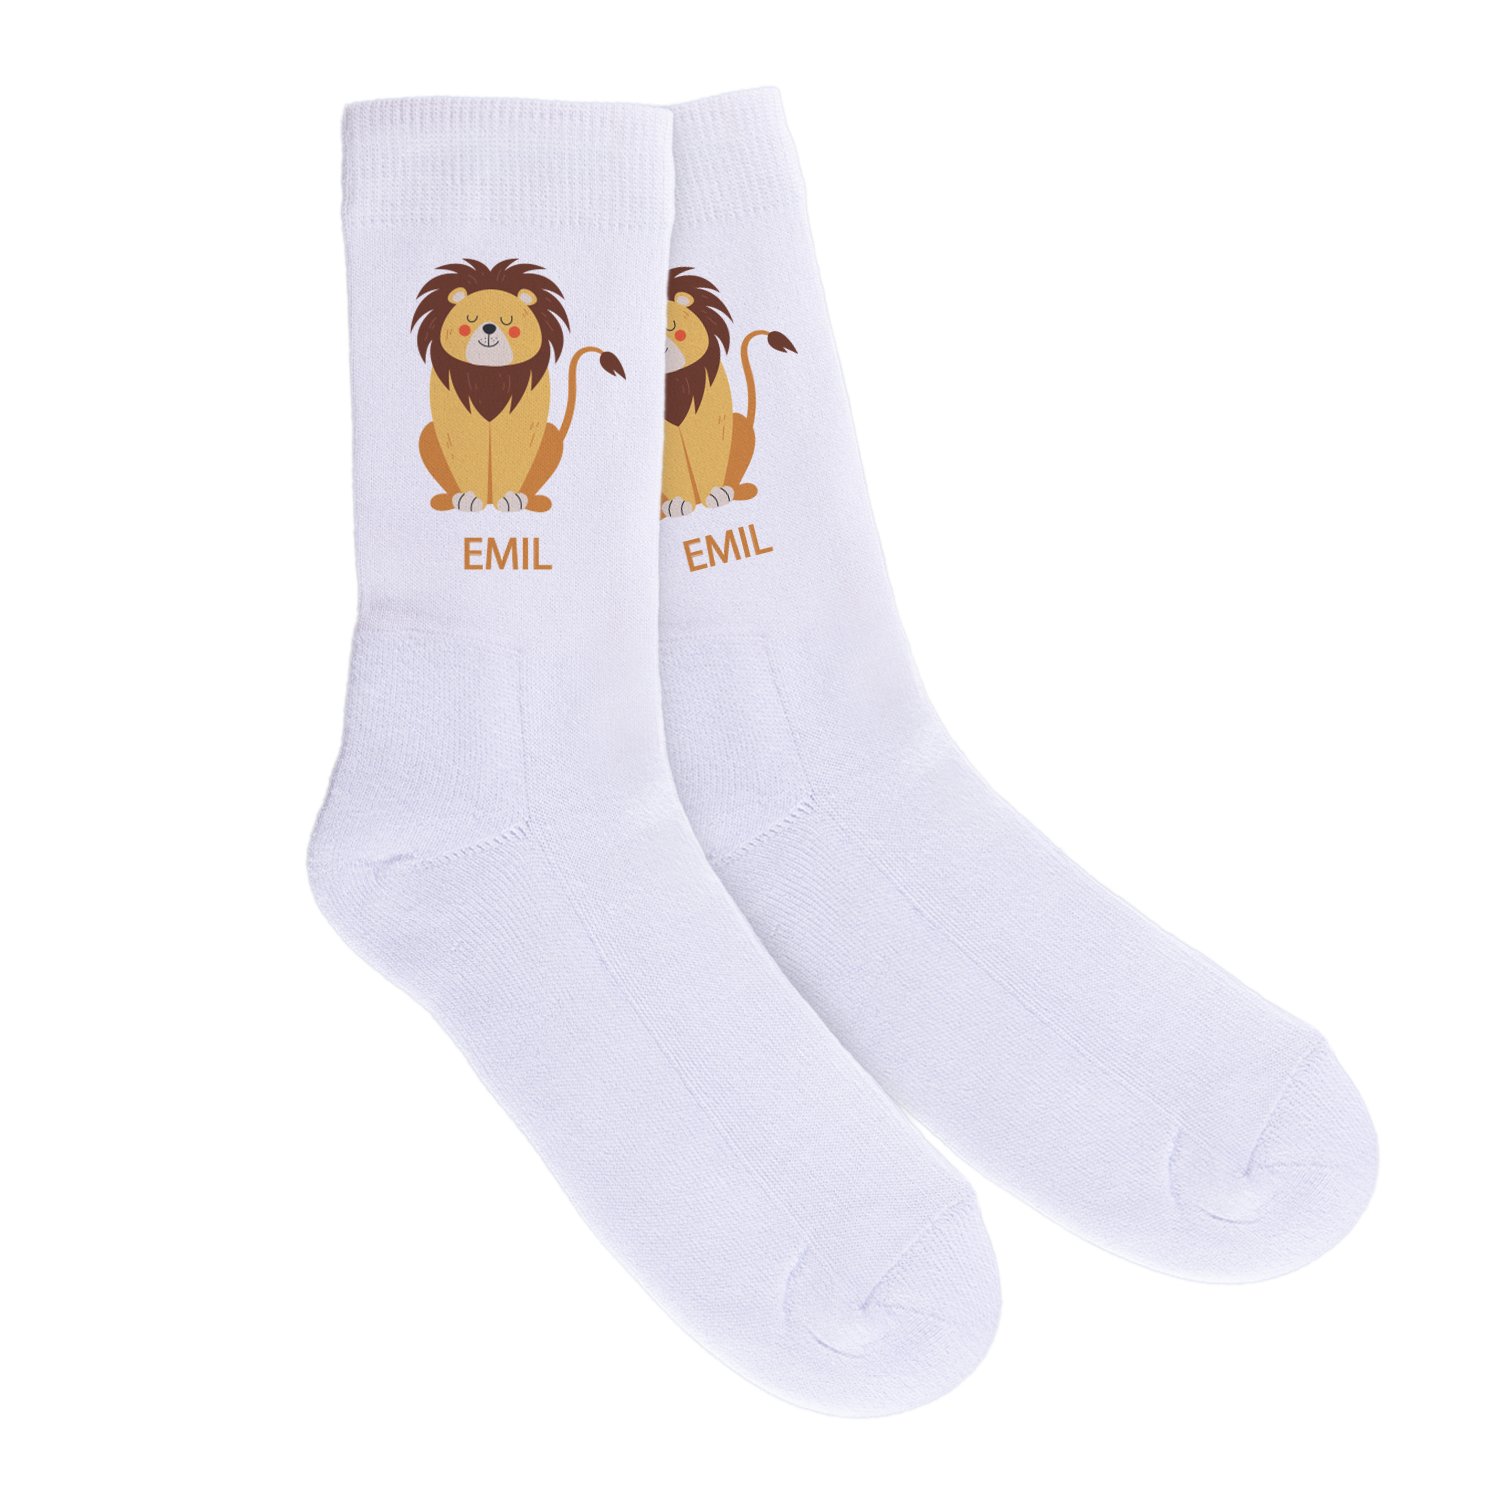 Personalisierbare Socken - Zootiere